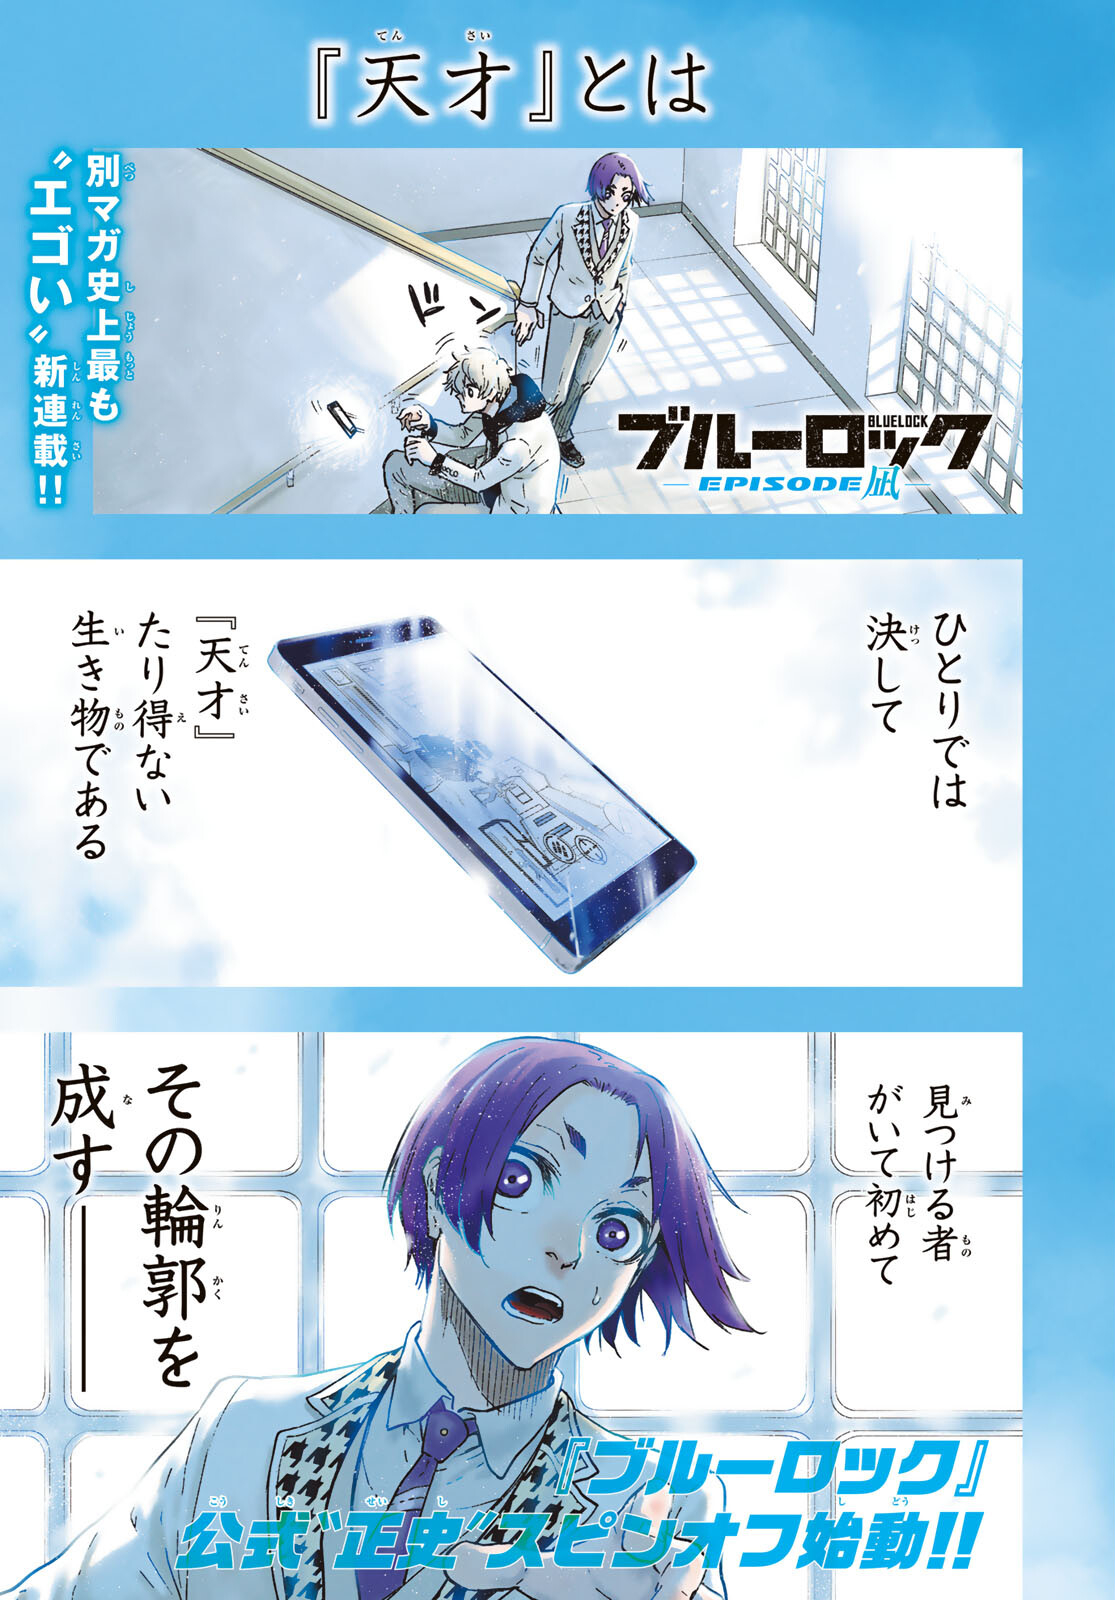 Chapter 10 (Episode Nagi), Blue Lock Wiki